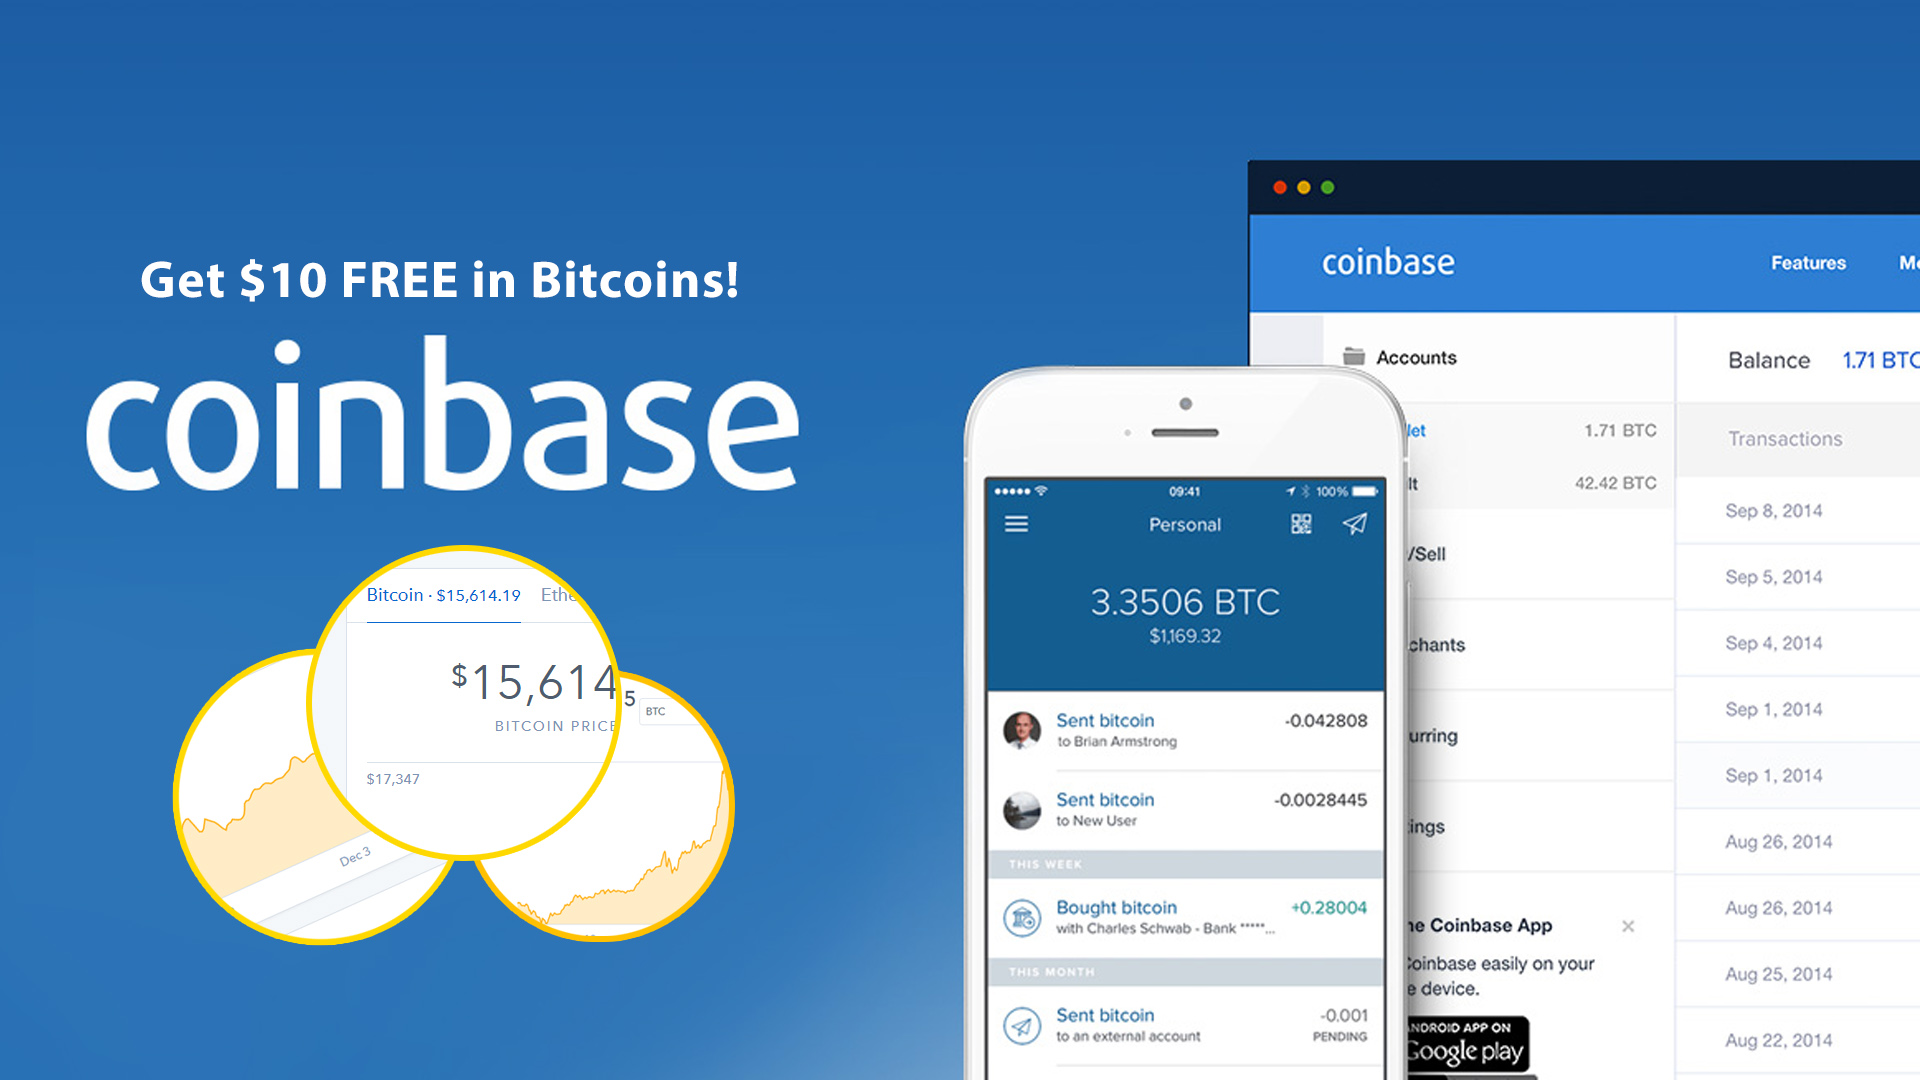 Coinbase Get 10 of FREE Bitcoins!